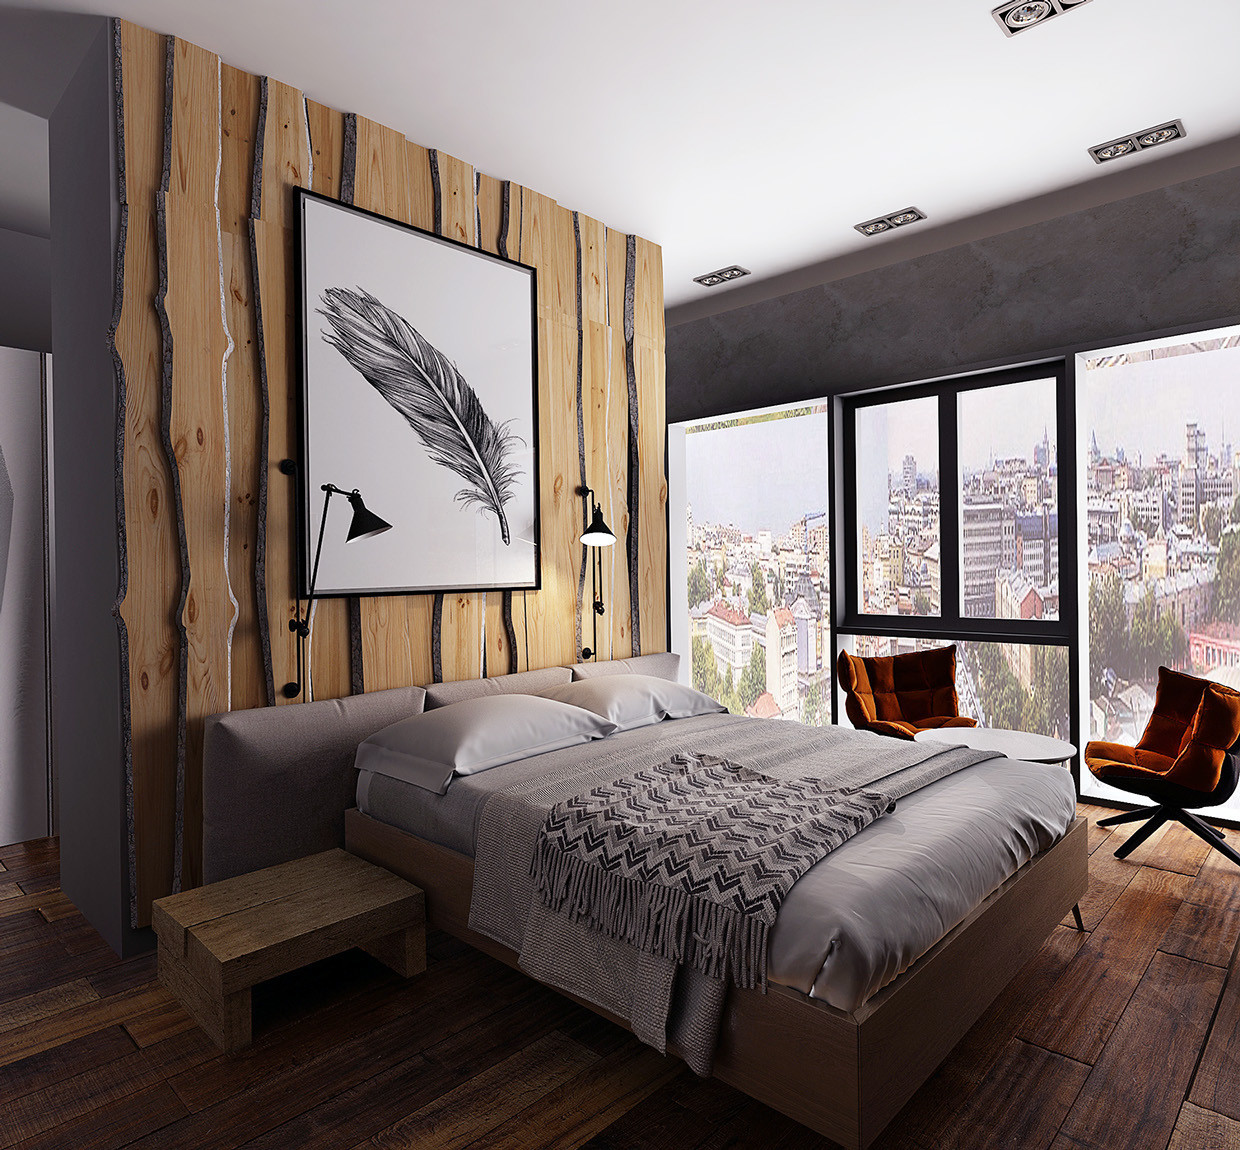 Rustic Industrial Bedroom
 Converted Industrial Spaces Be es Gorgeous Apartments